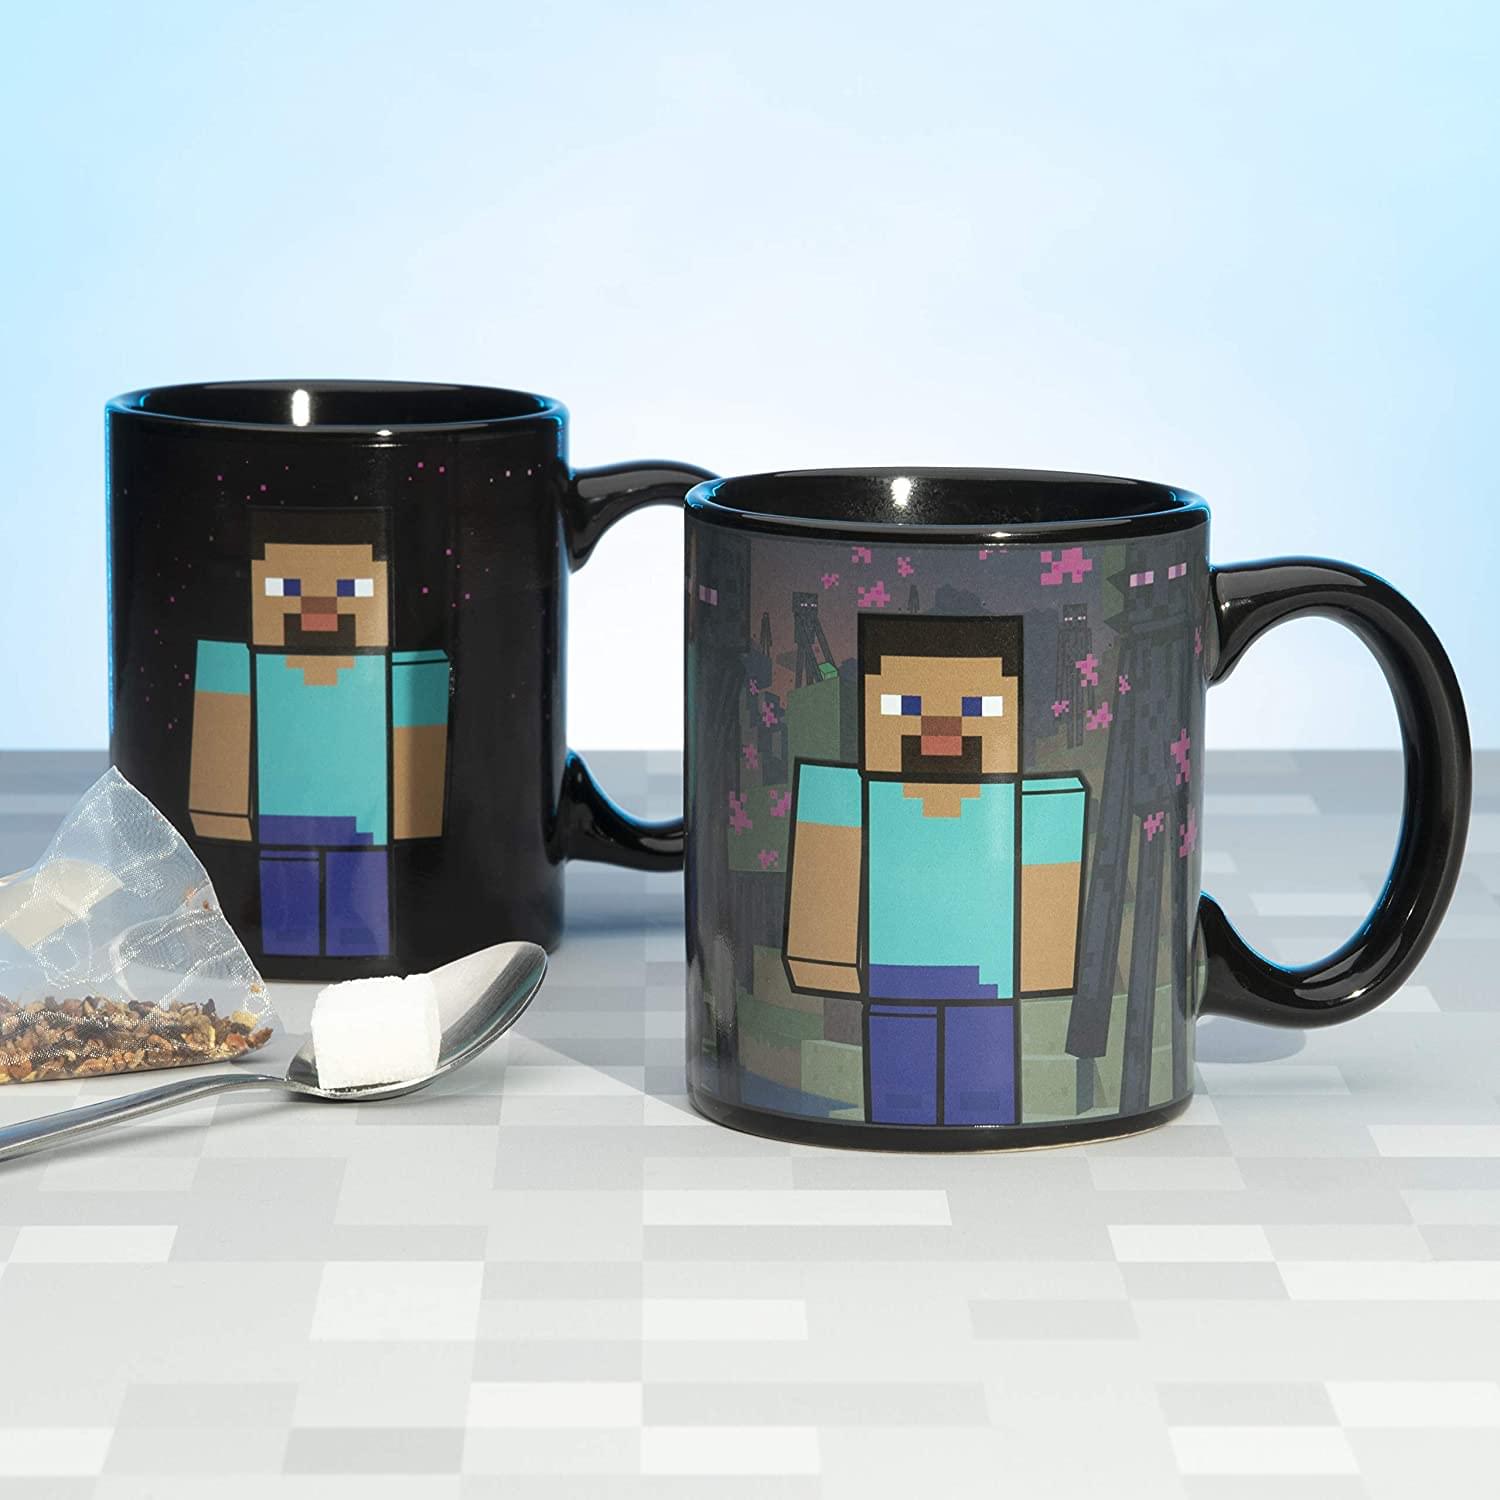 Minecraft Enderman 11oz Heat Change Ceramic Mug